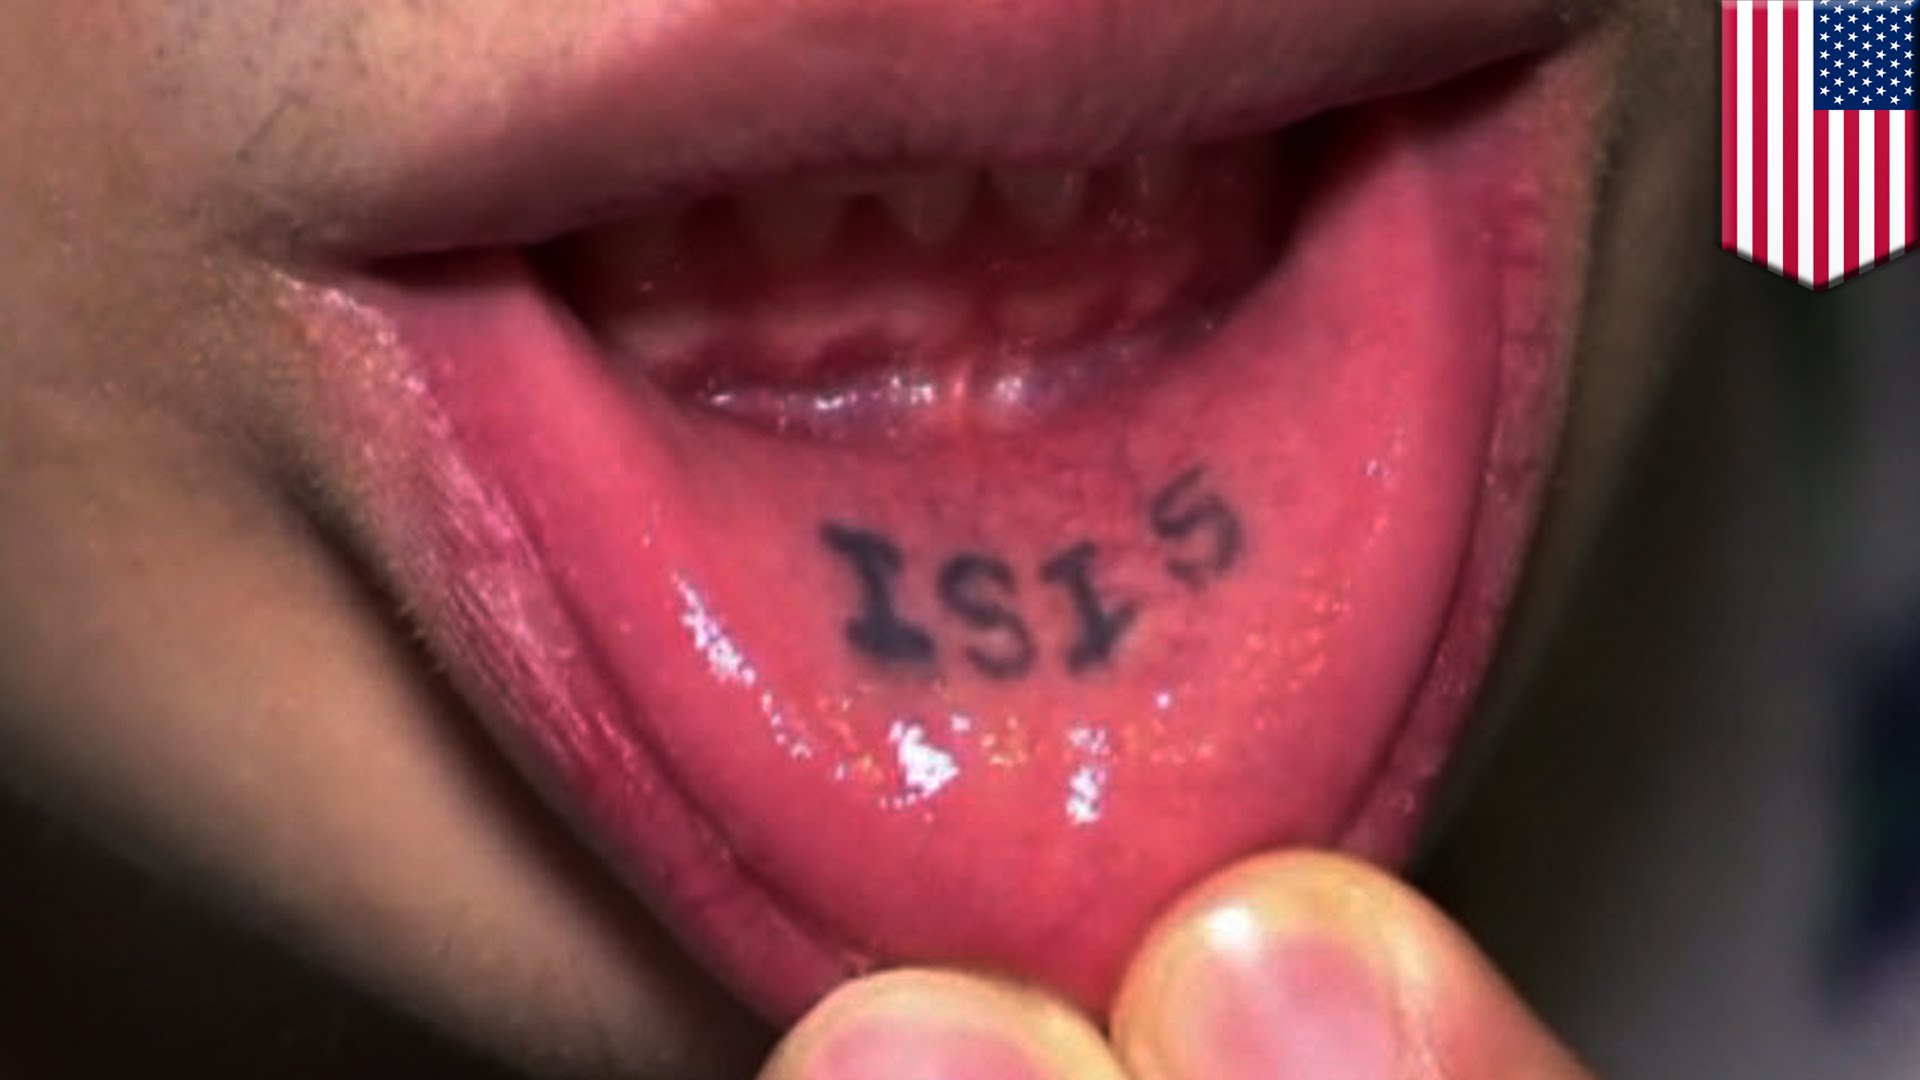 Isis Lettering Tattoo On Inner Lip